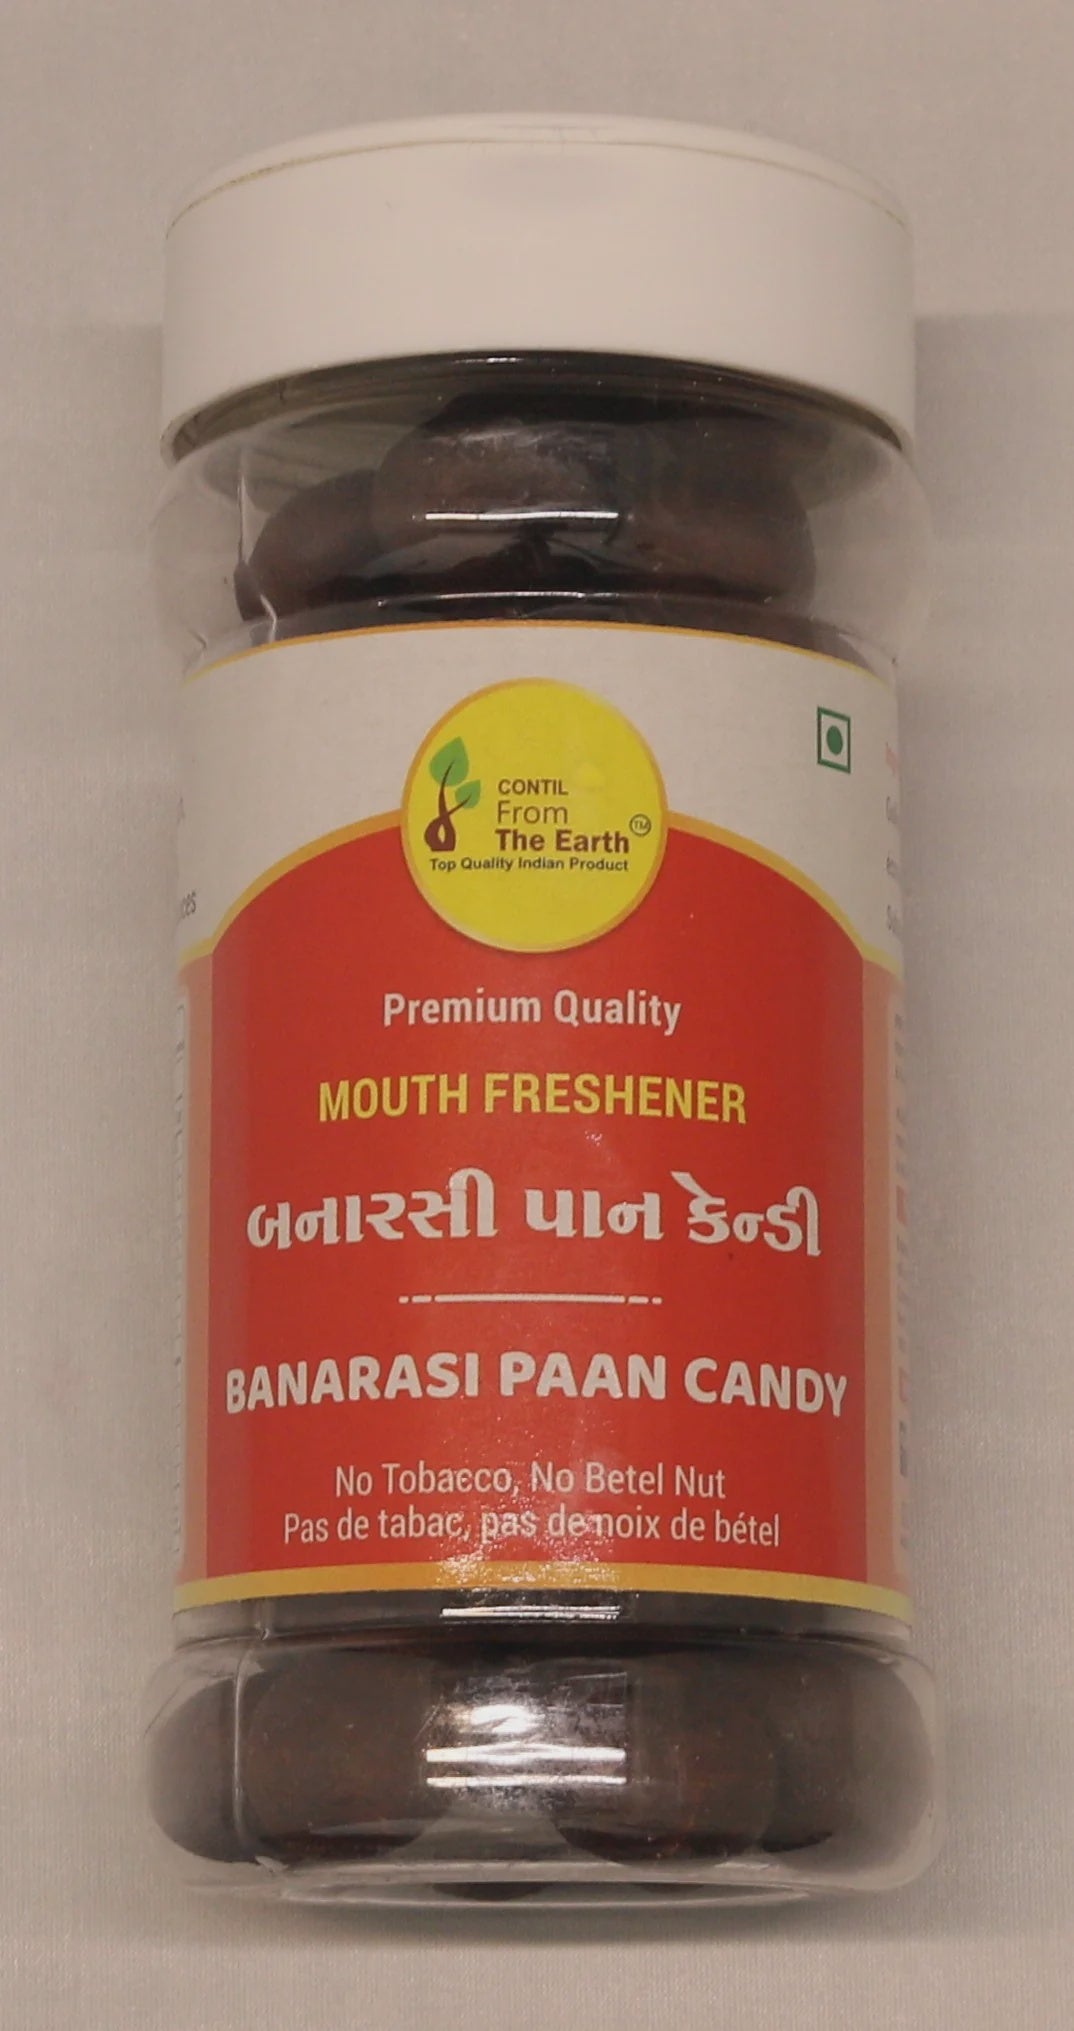 From the Earth - Banarasi Paan Candy 250g